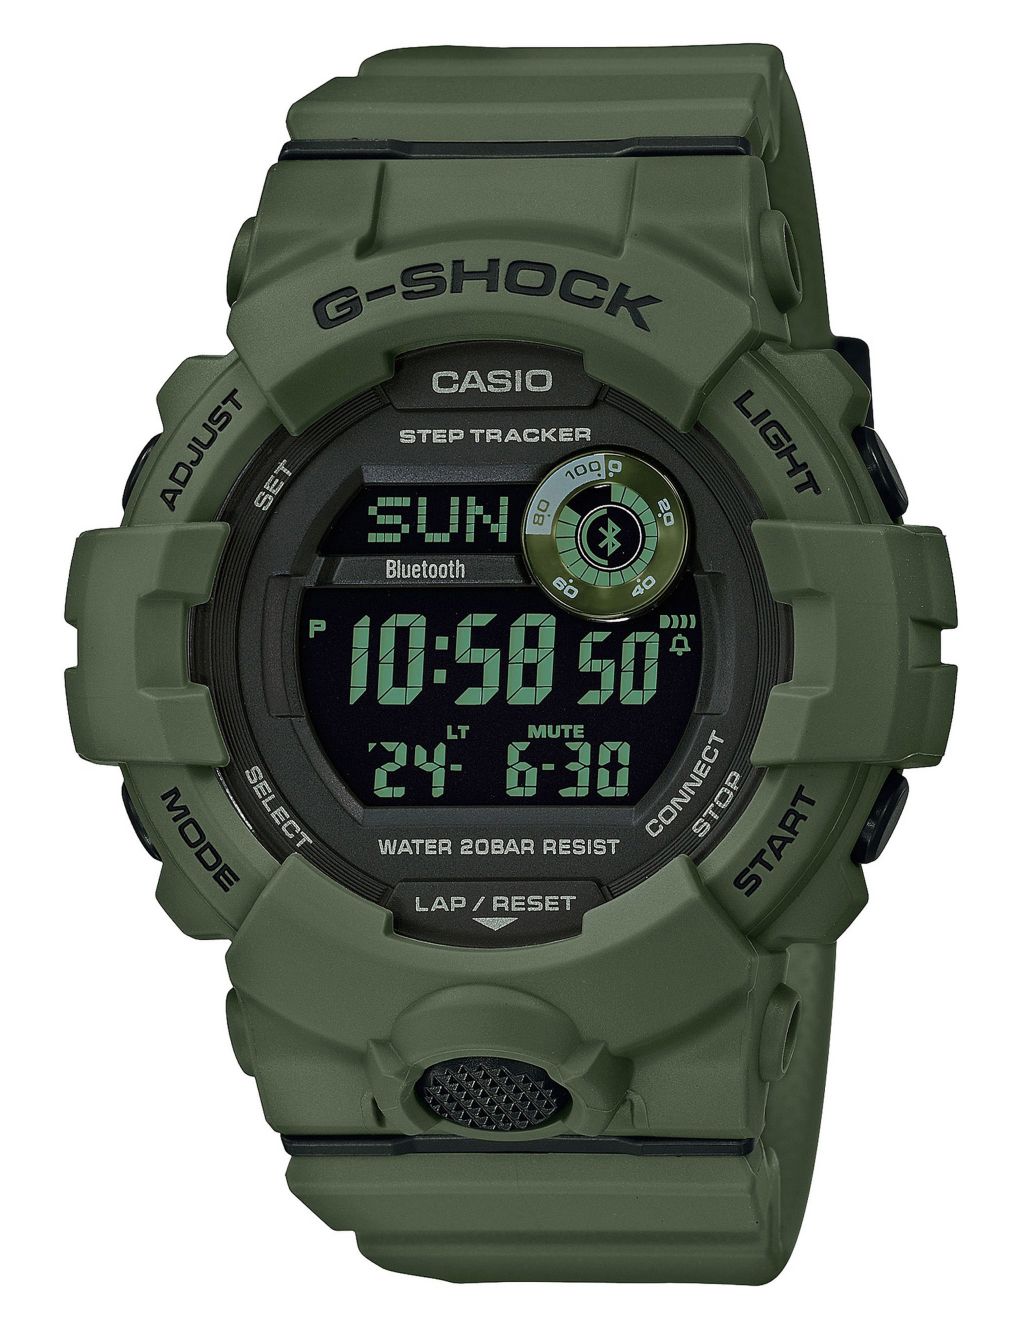 Casio G-Shock Waterproof Watch image 1